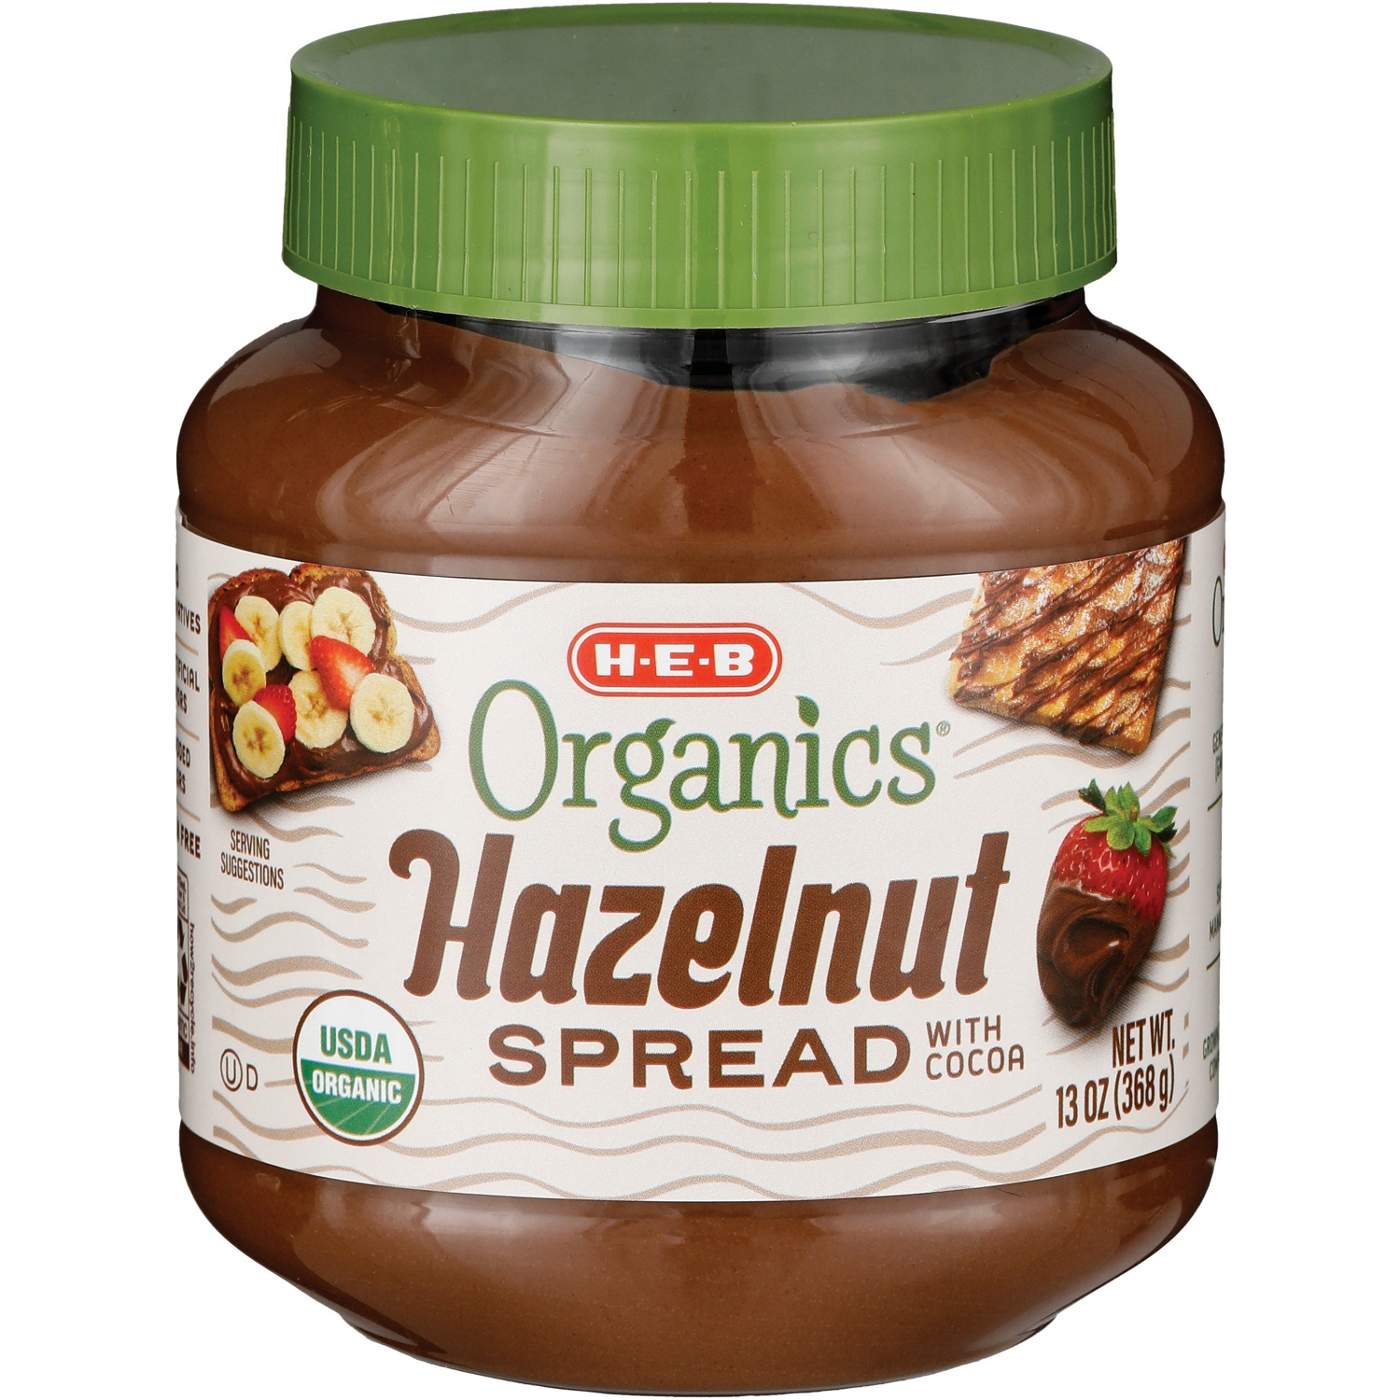 H-E-B Organics Hazelnut Spread with Cocoa; image 2 of 2